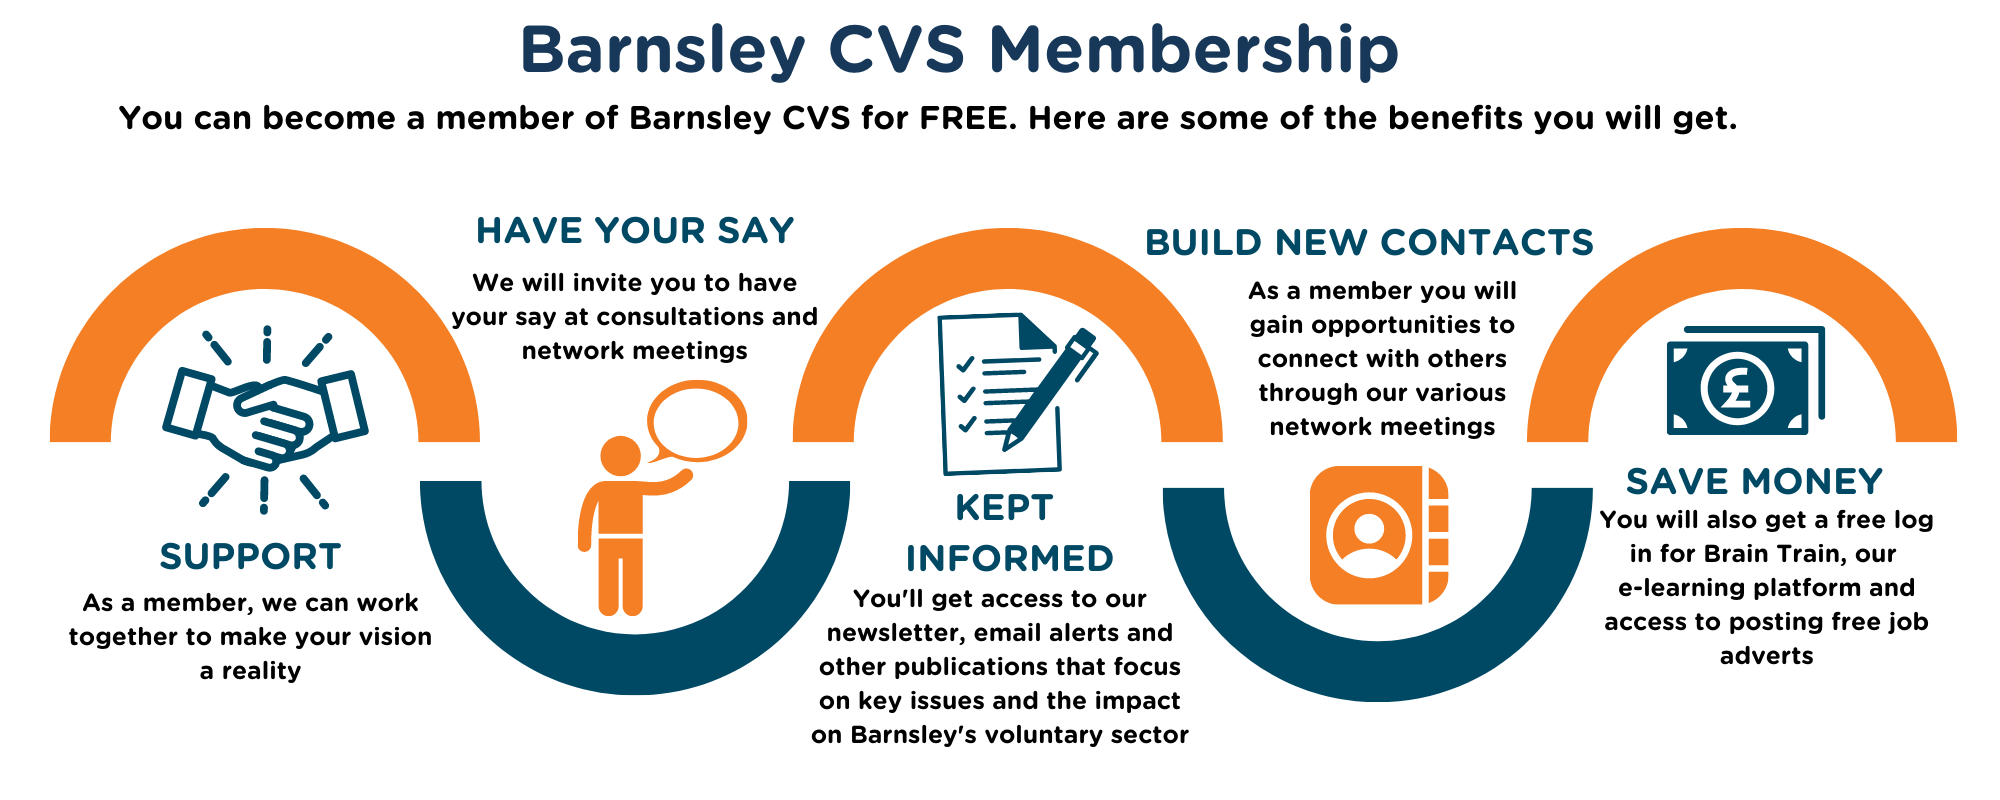 Barnsley CVS Membership Details